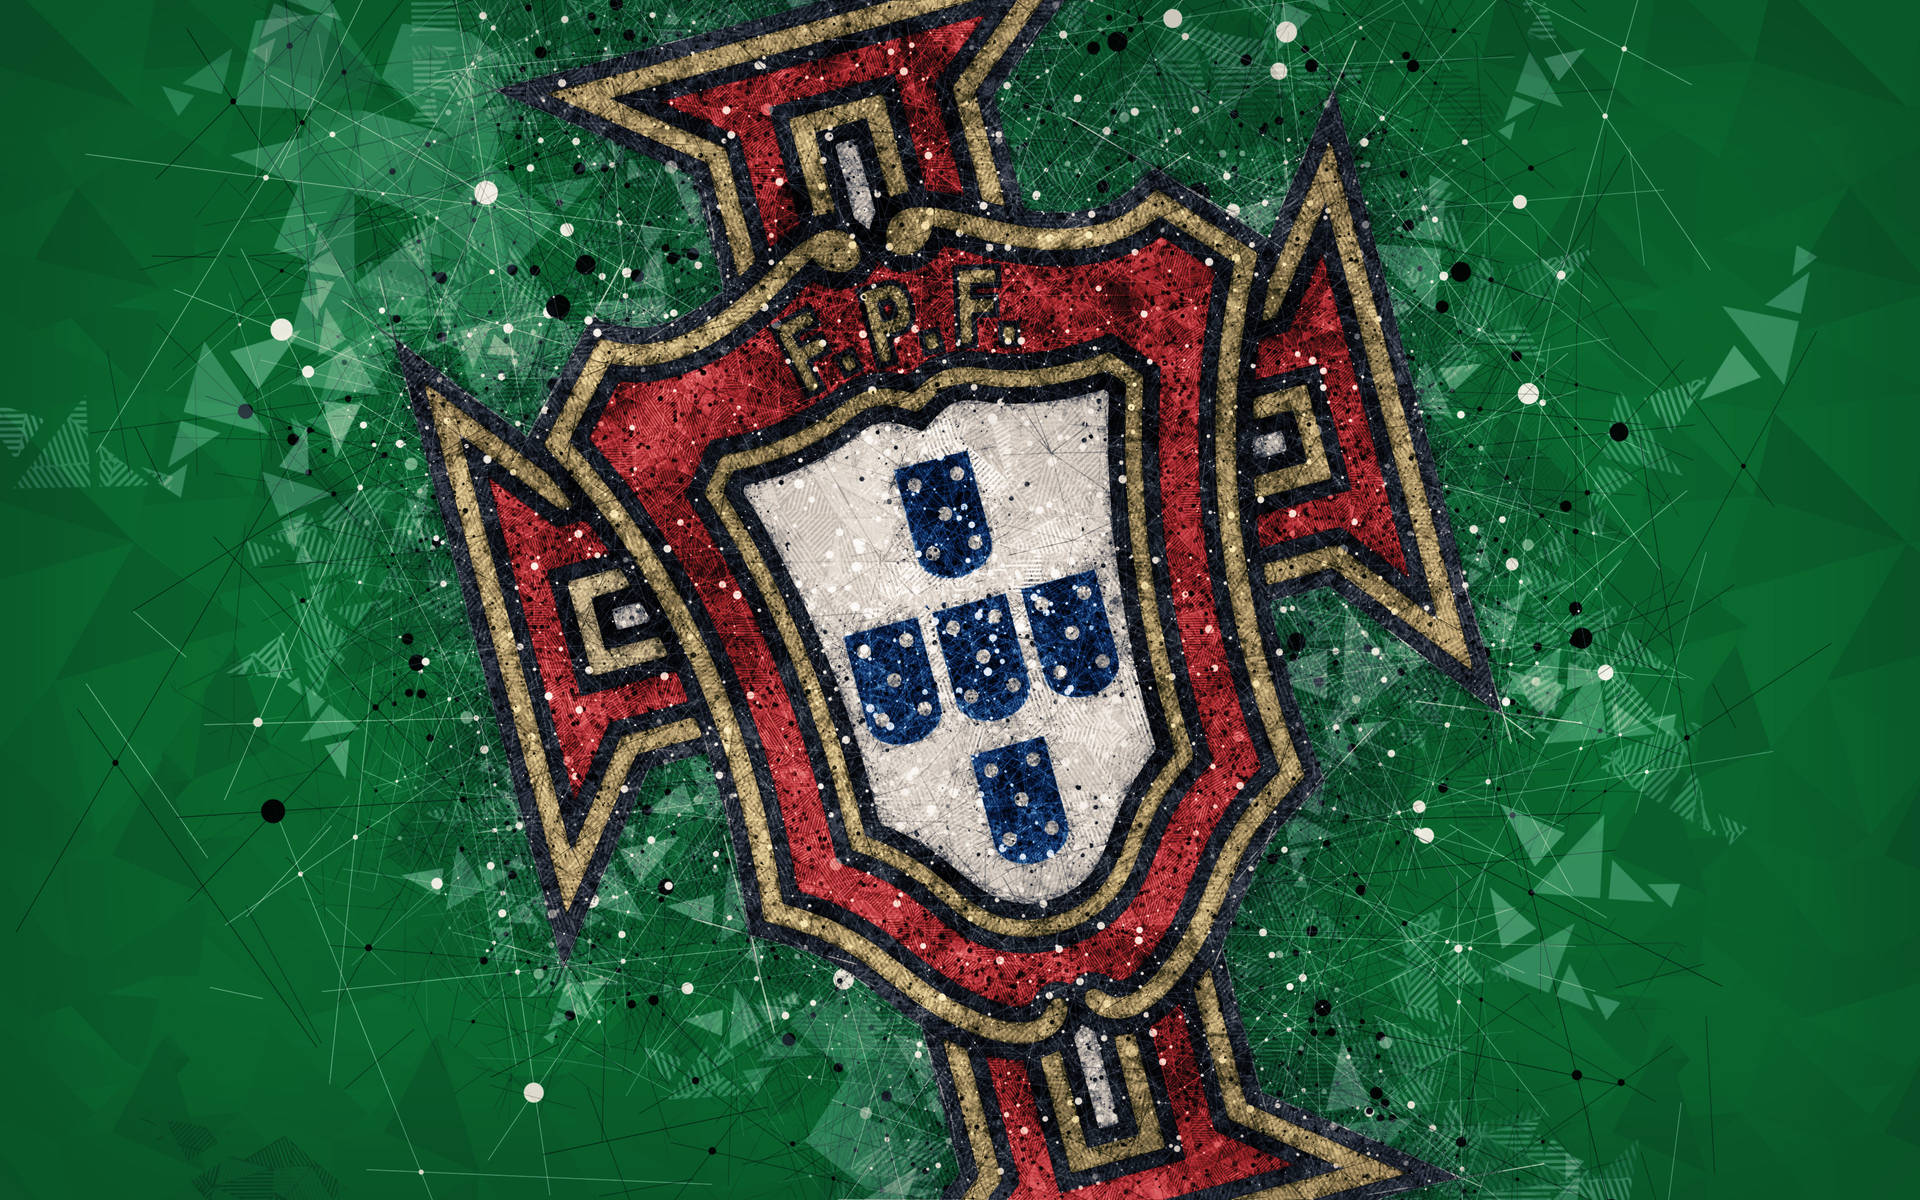 Portugal National Football Team Logo In Green